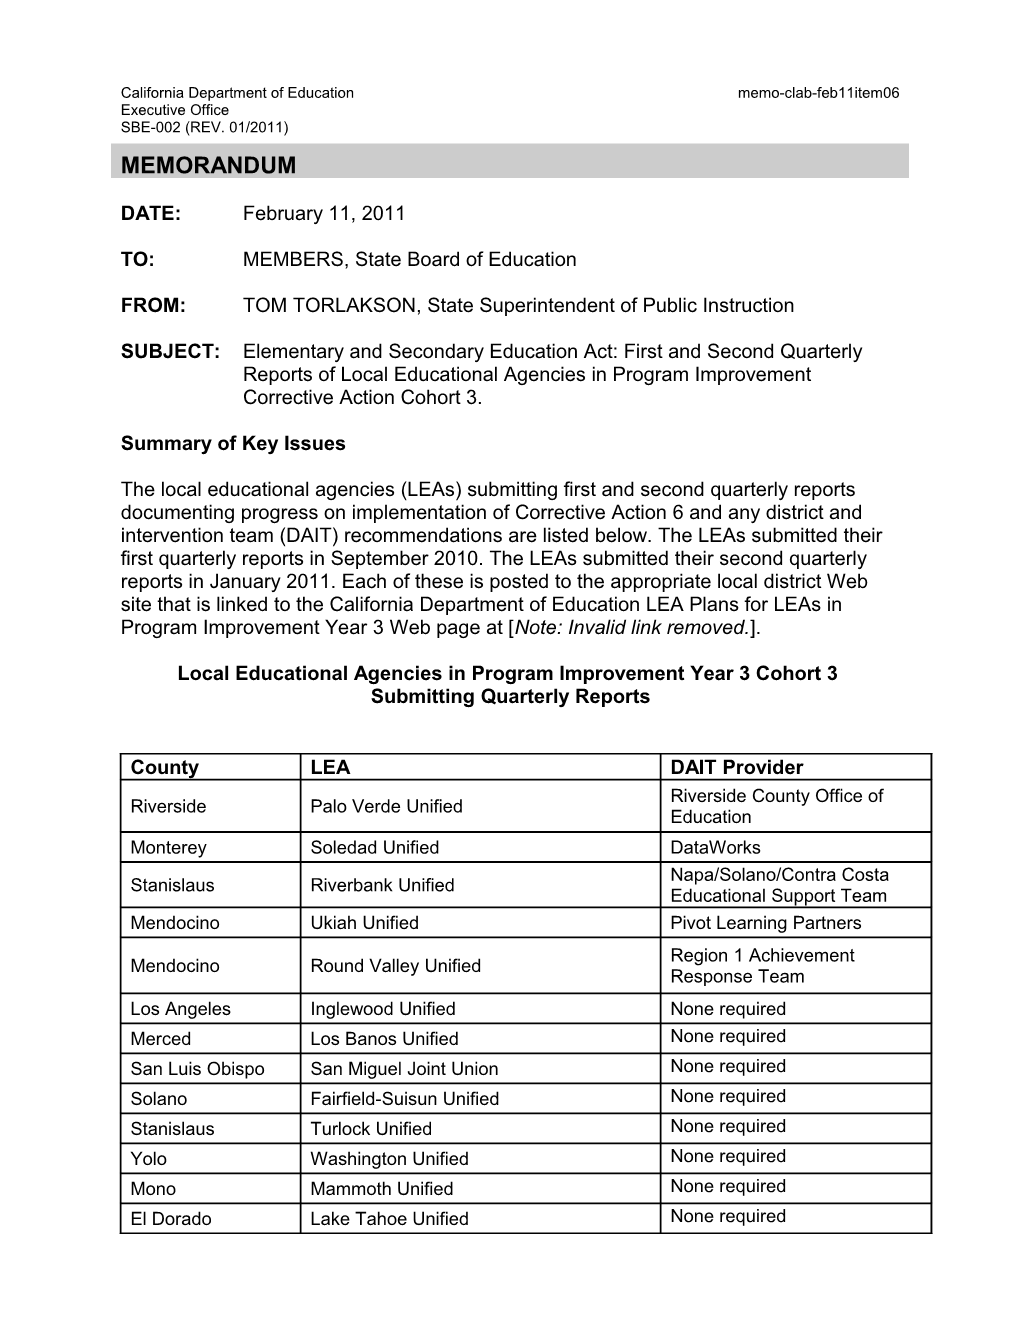 February 2011 Memorandum DSID Item 6 - Information Memorandum (CA State Board of Education)